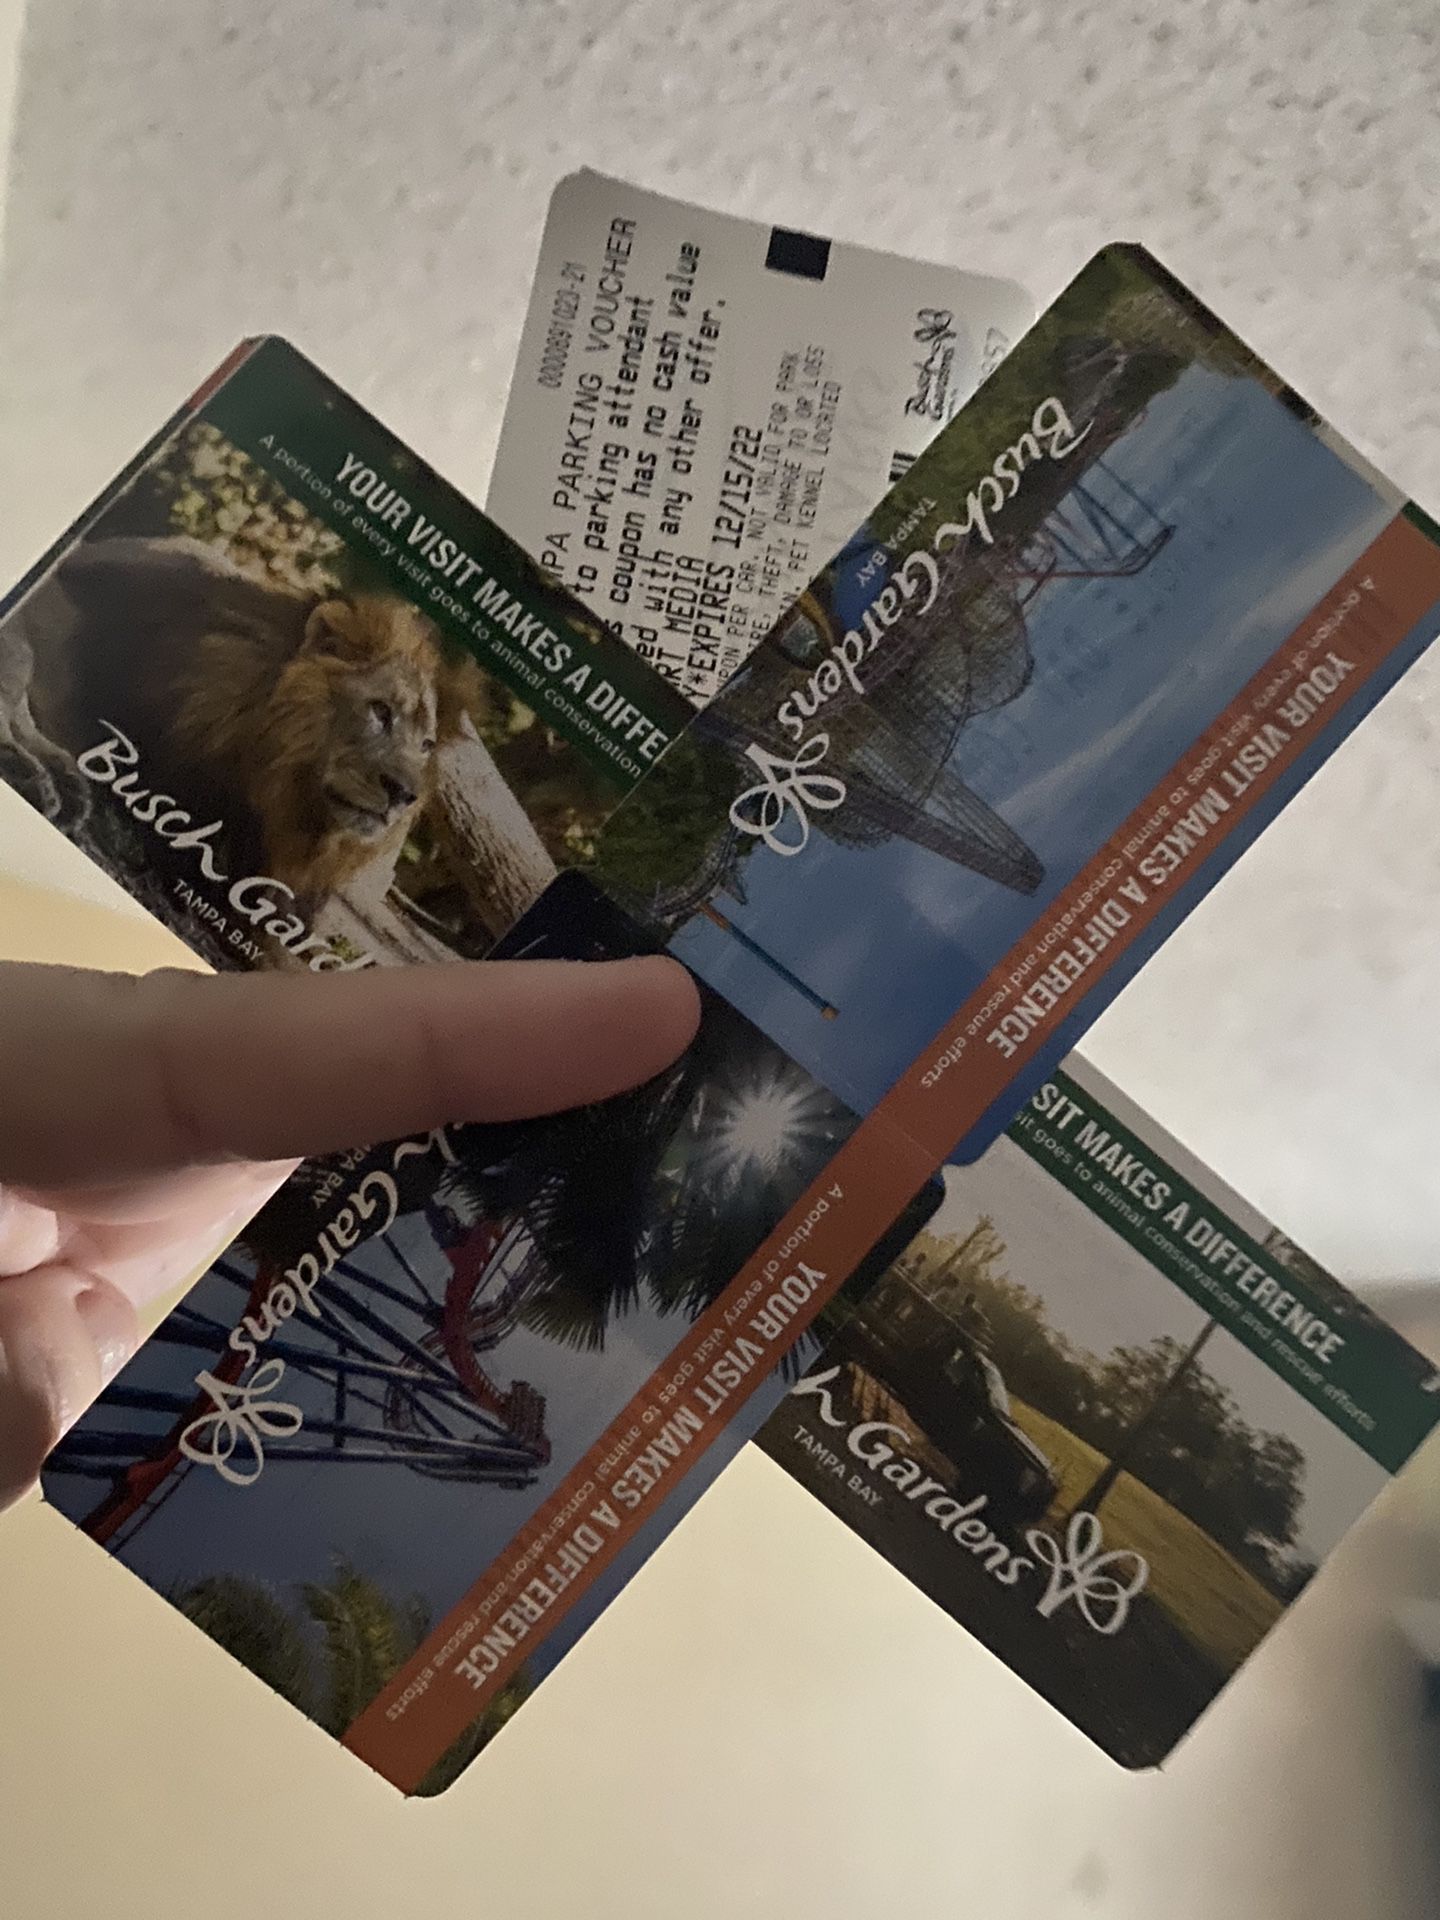 4 Busch Gardens Tickets And 1 Parking Voucher